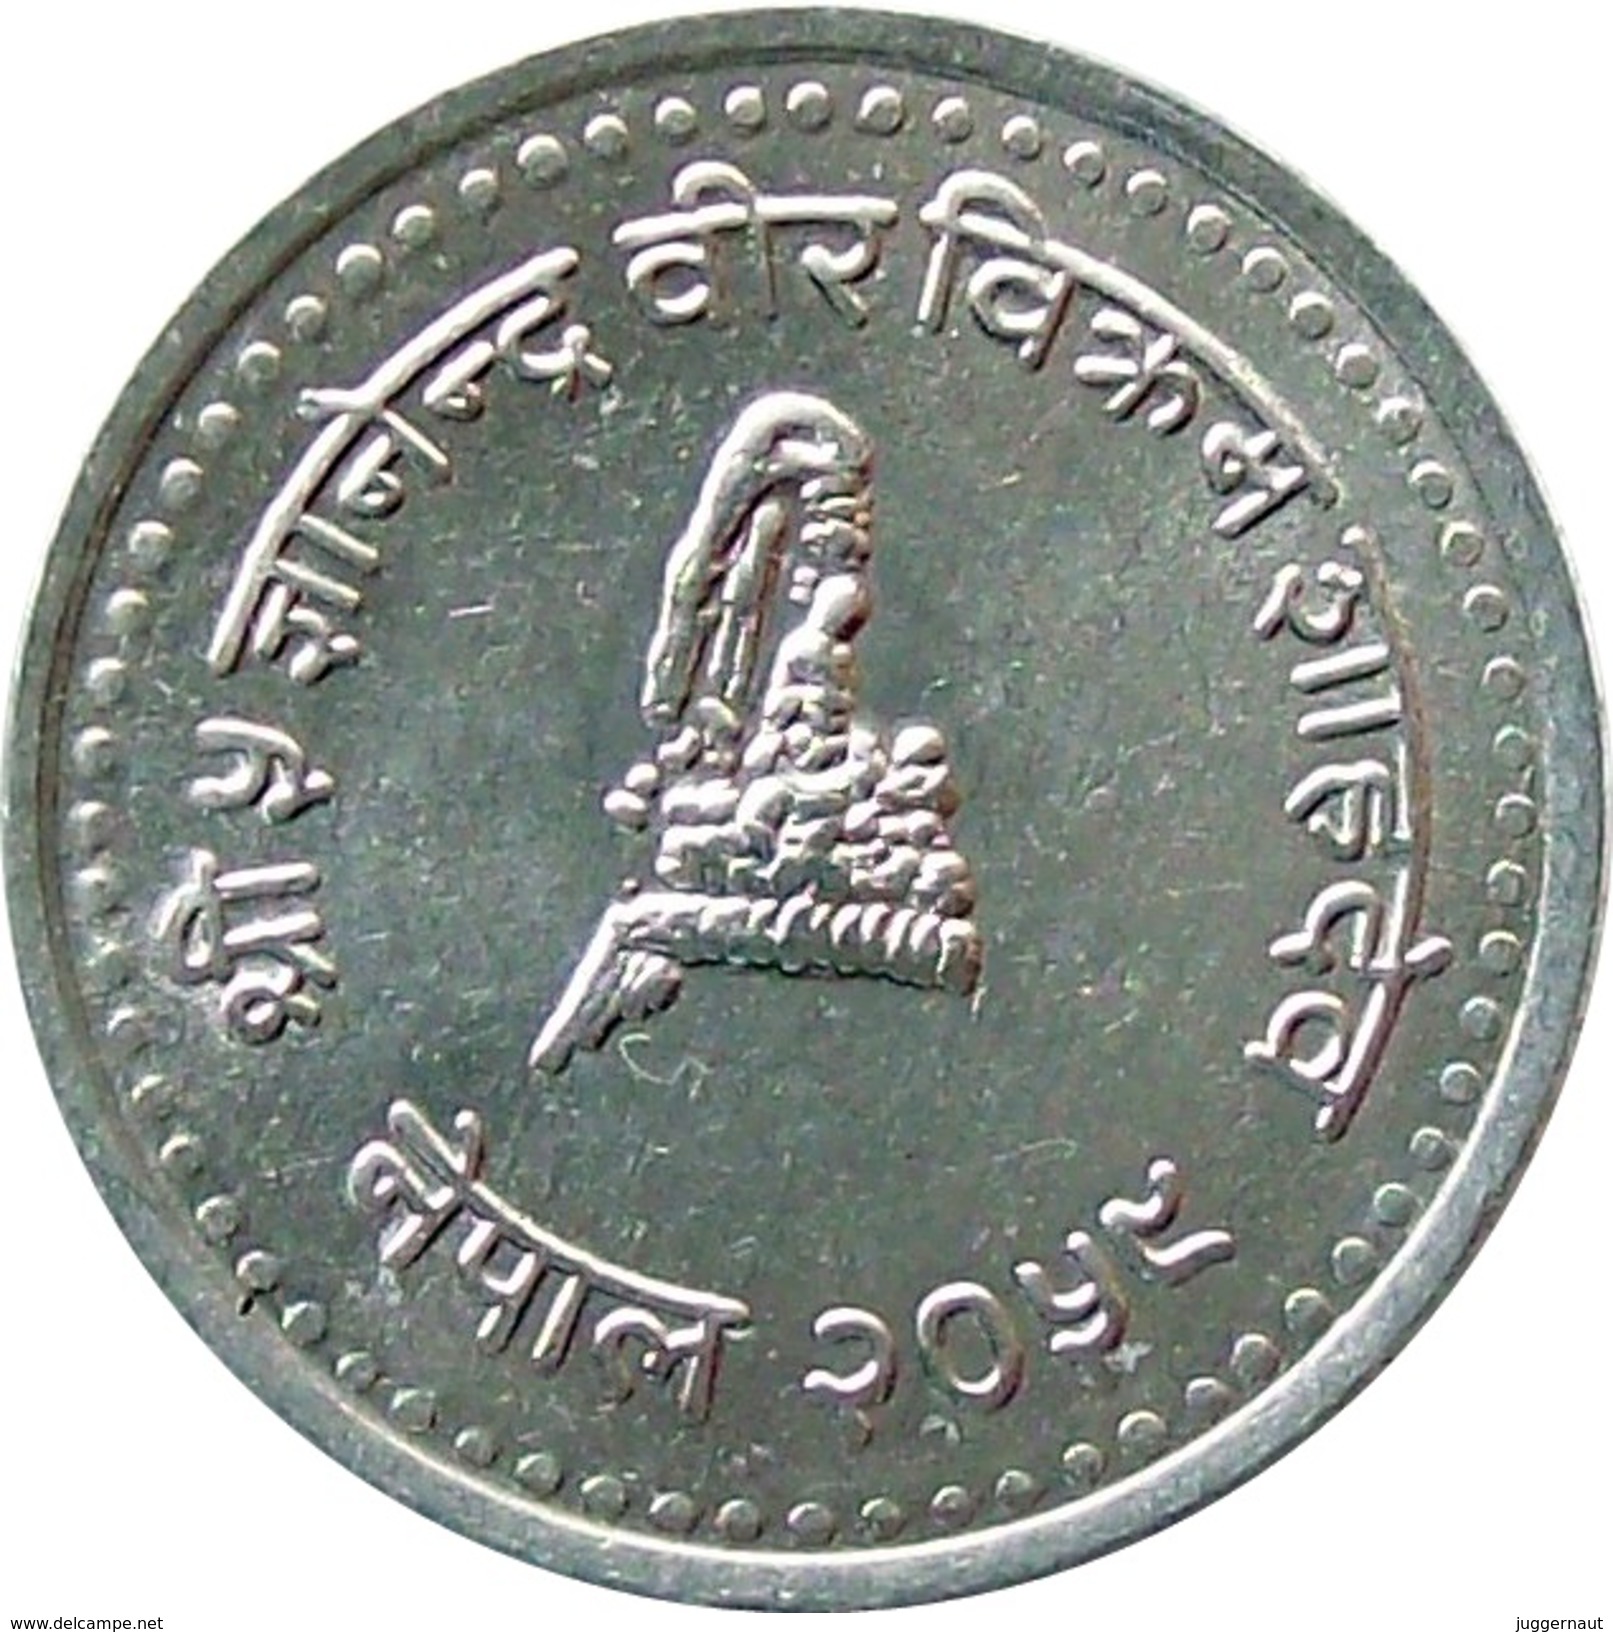 NEPAL 50 PAISA SWAYAMBHUNATH TEMPLE ALUMINUM COIN NEPAL 2002 KM-1149 UNCIRCULATED UNC - Népal